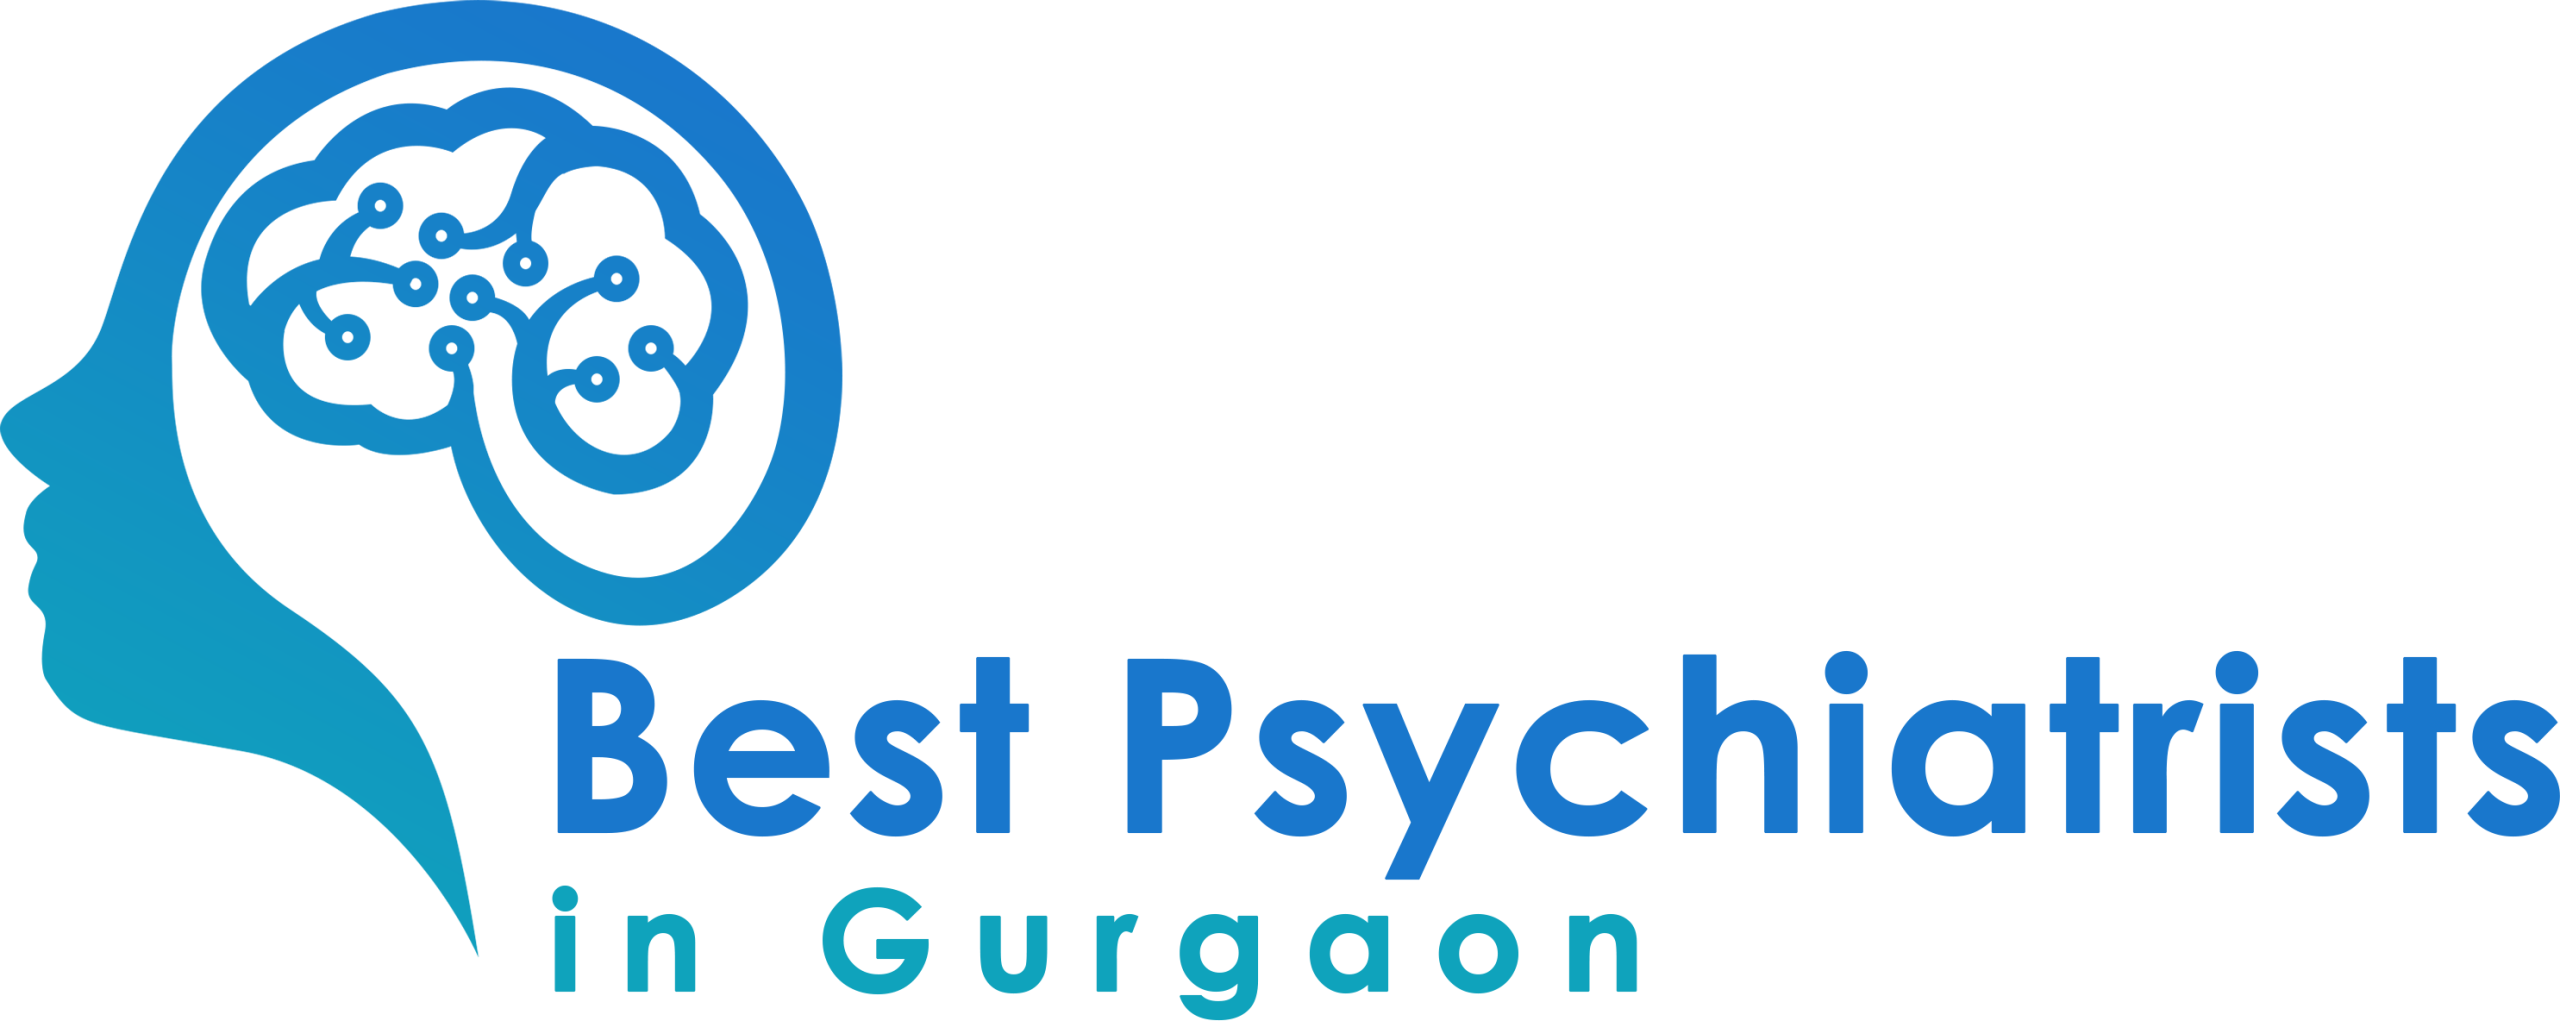 Best Psychiatrists in Gurgaon